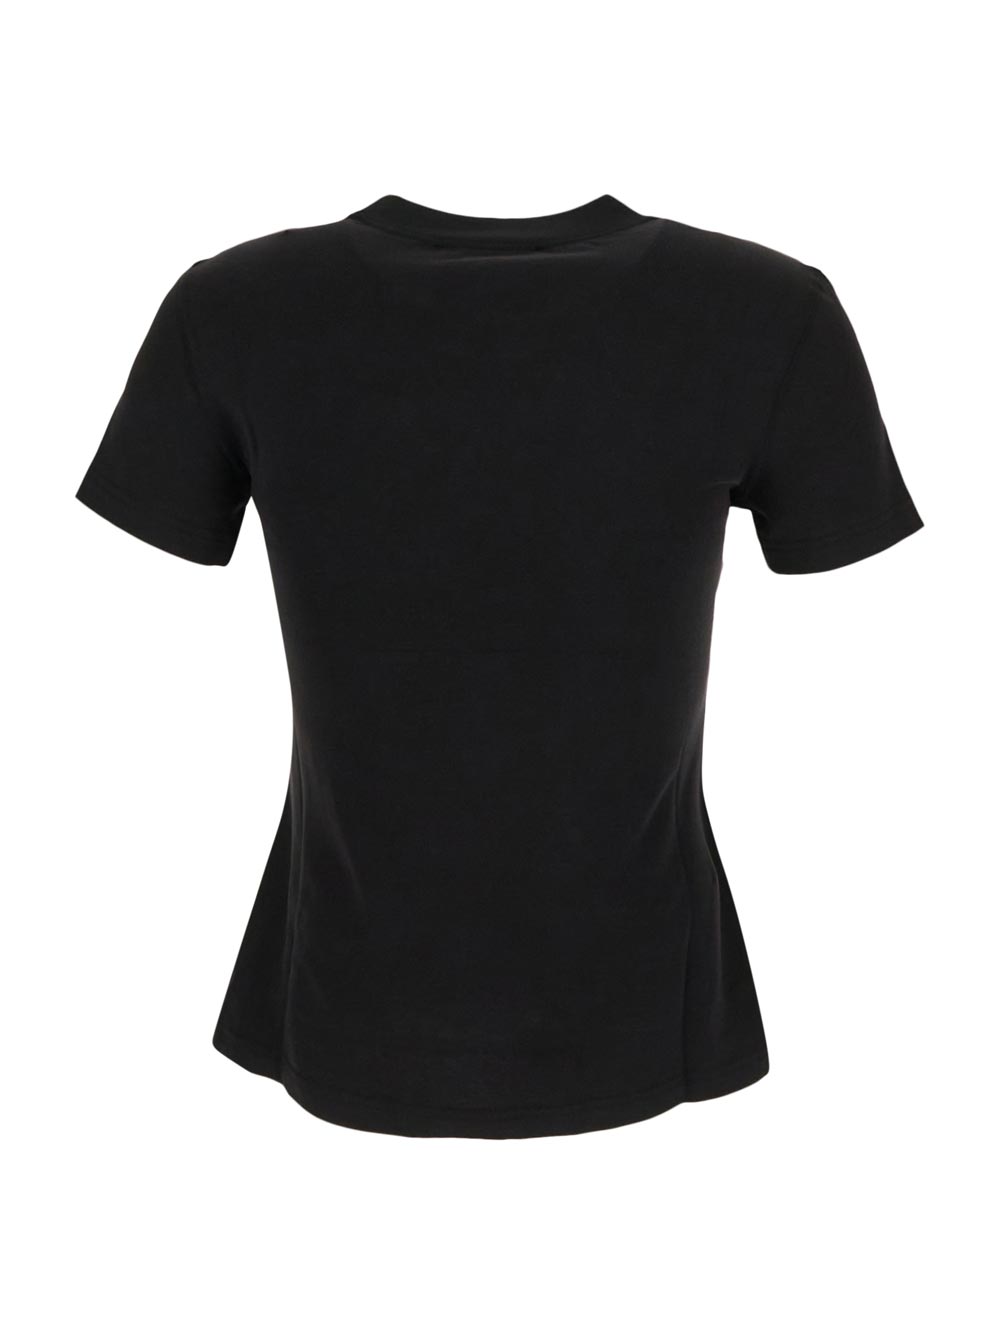 VERSACE JEANS COUTURE VERSACE JEANS COUTURE T-shirt black 76HAHT02CJ03TG89